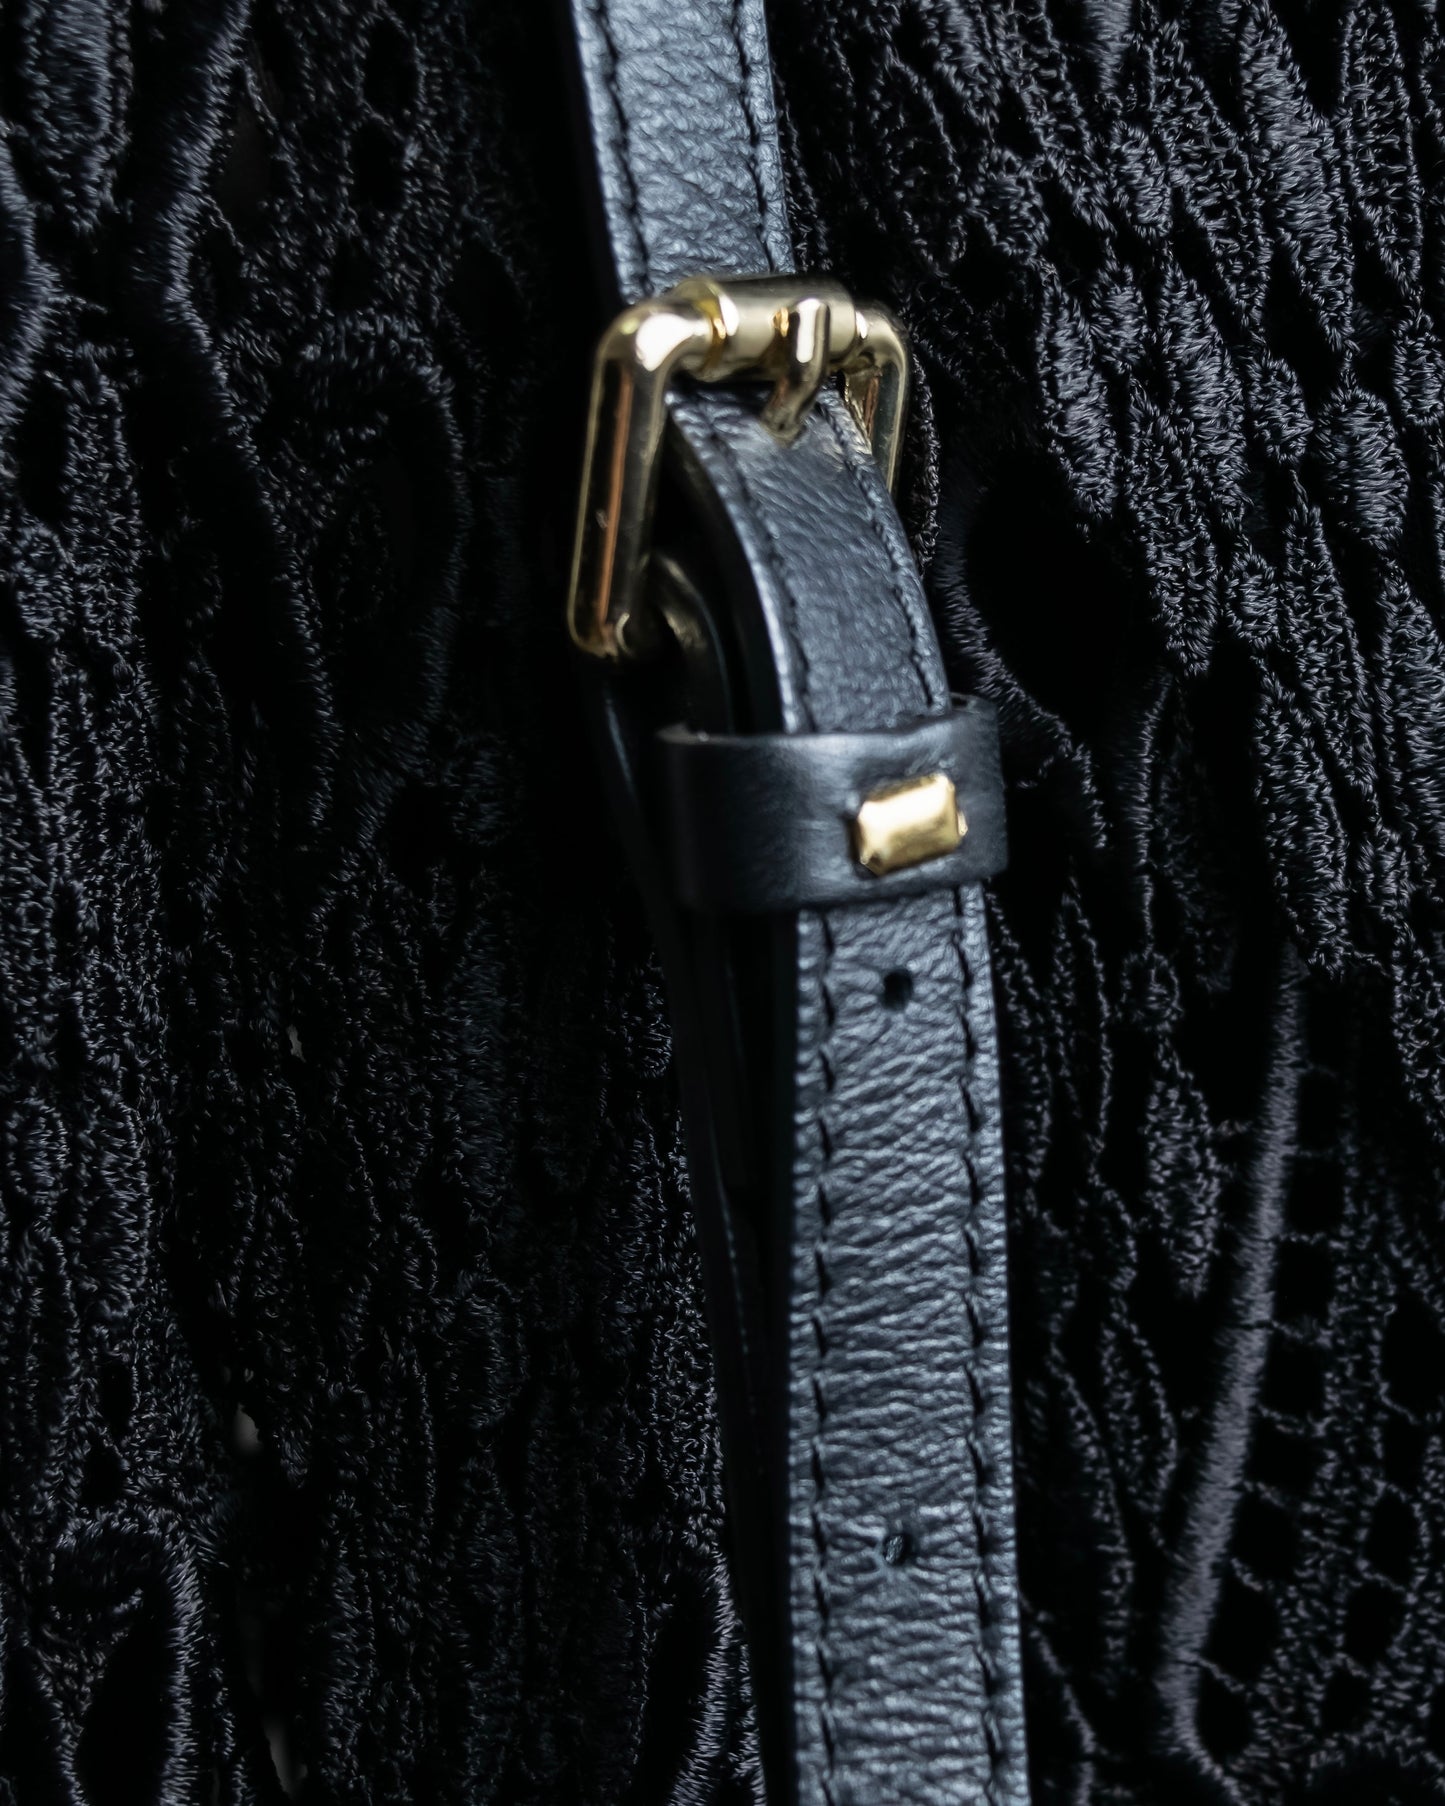 "GIANNI CHIARINI" High quality leather 2way shoulder bag